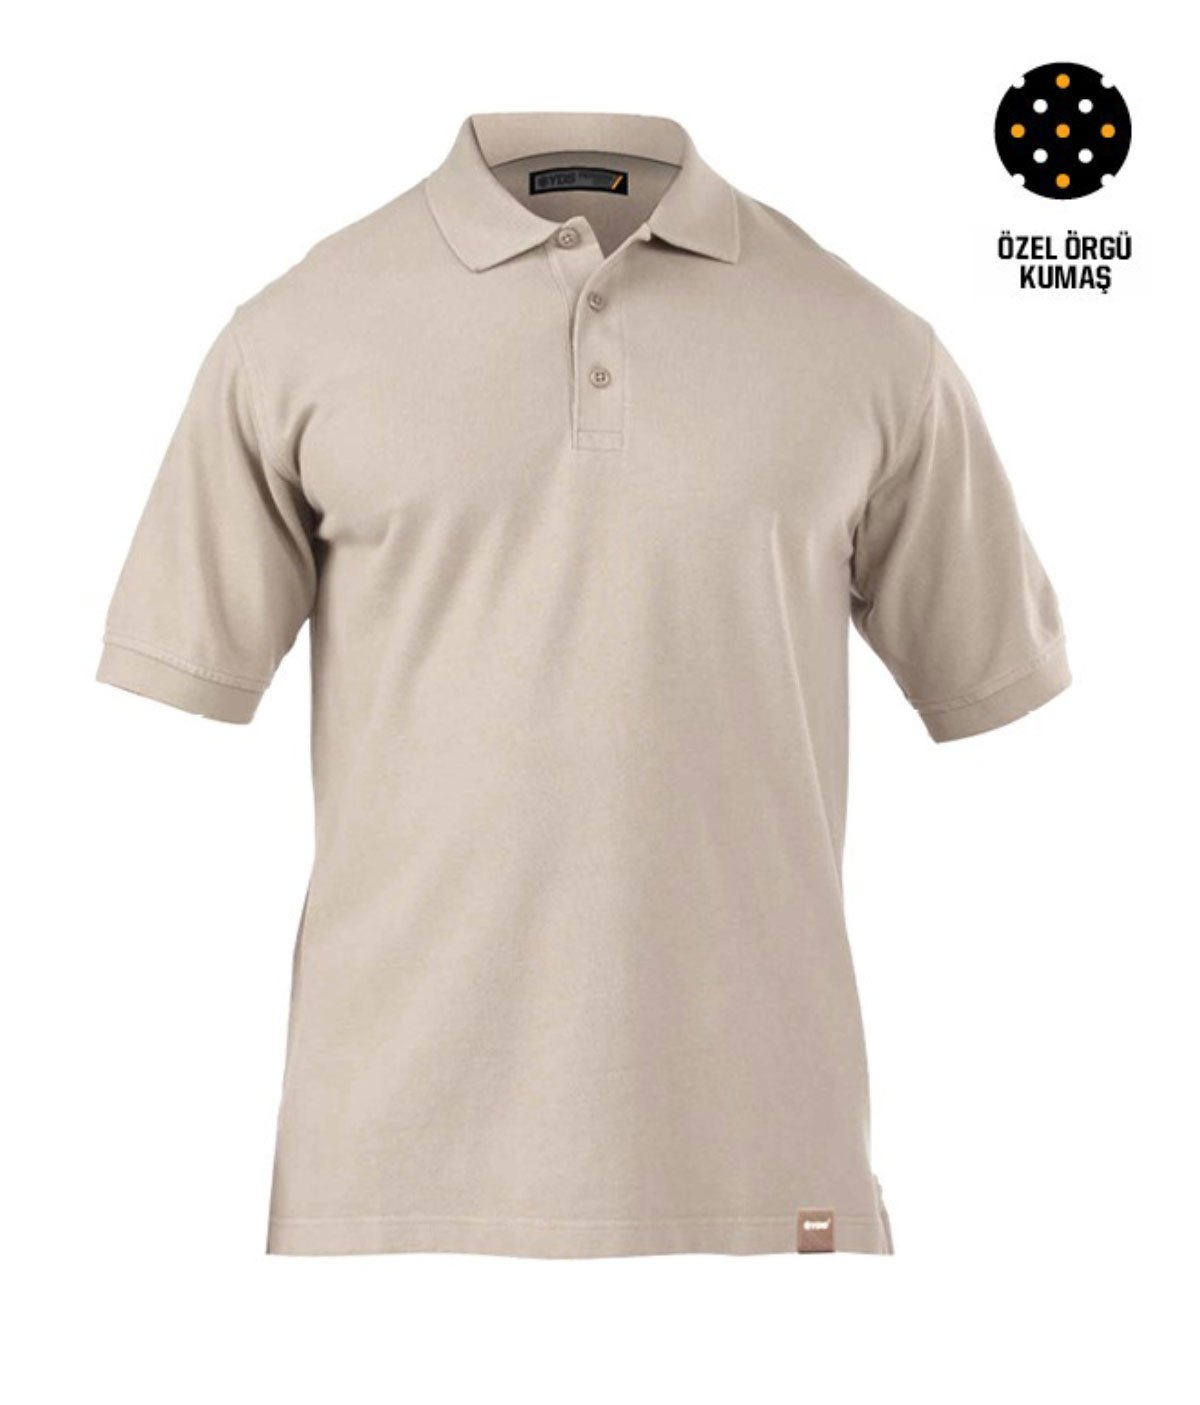 YDS Professional Polo T-Shirt-Bej